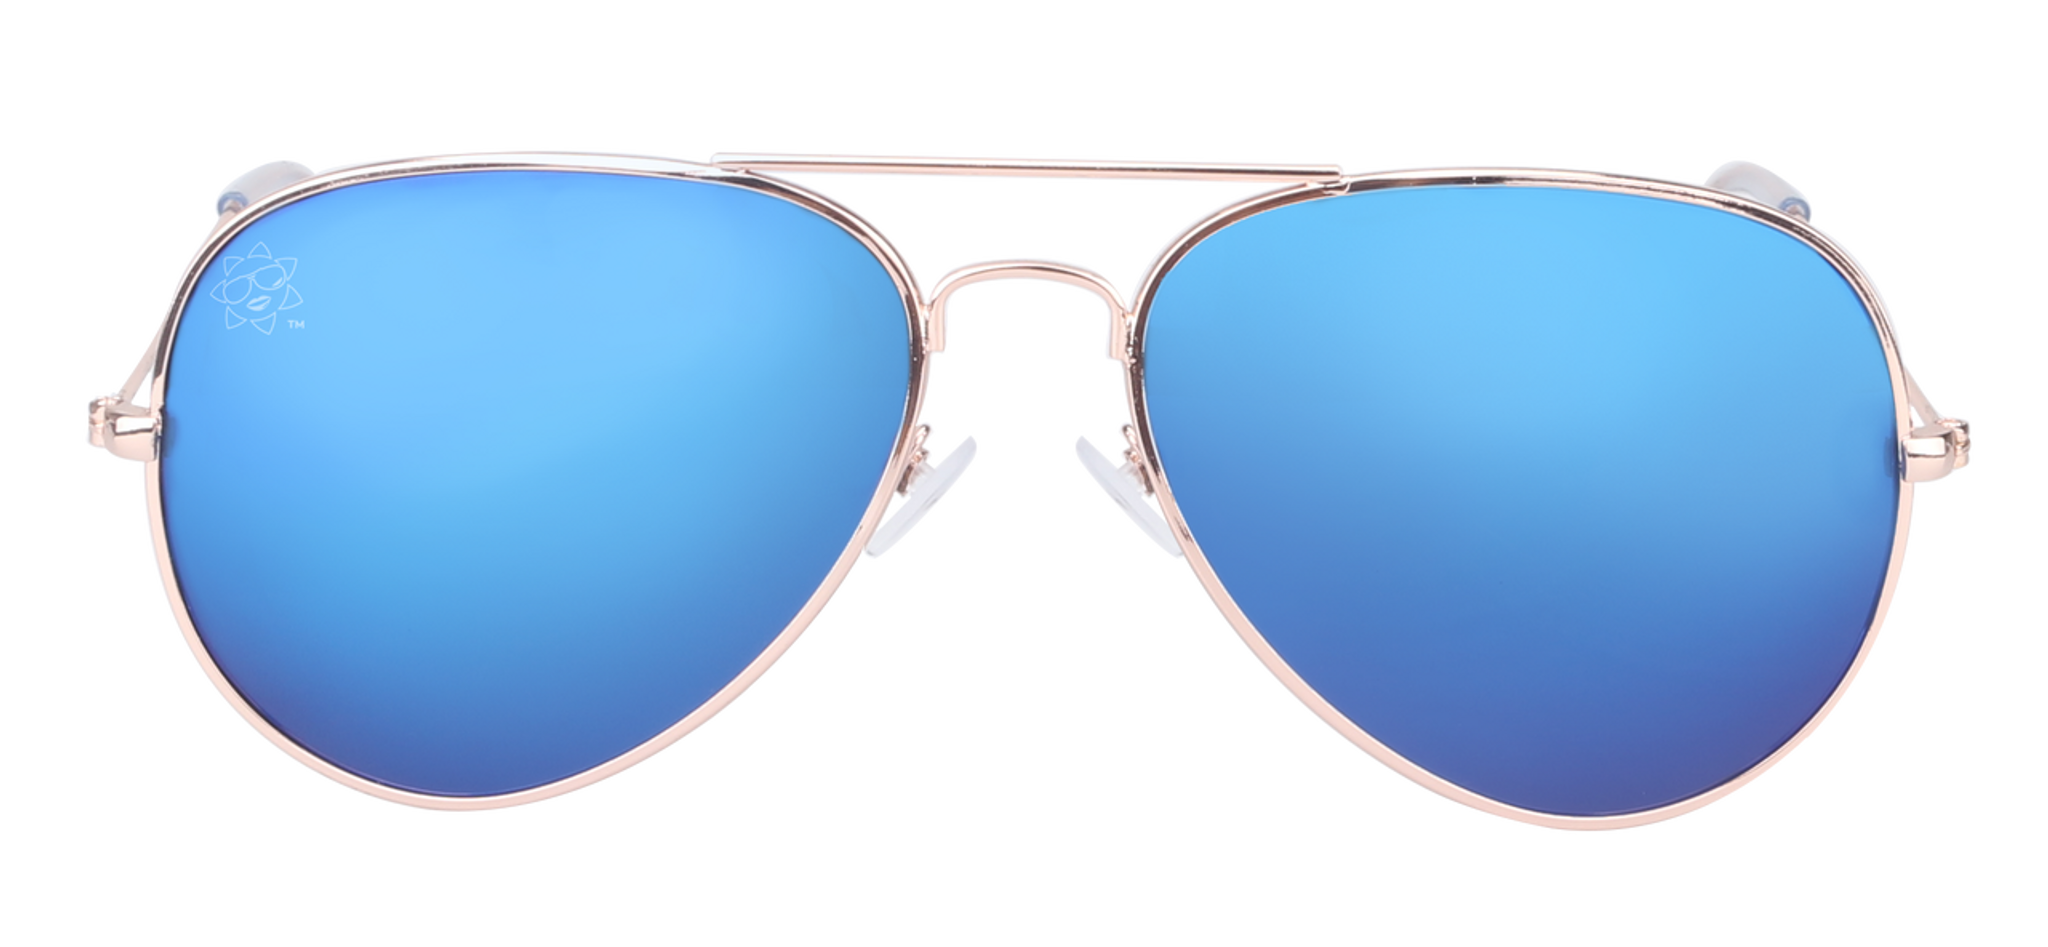 Sunkissed Aviator Sunglass with Blue and Orange Chrome lenses